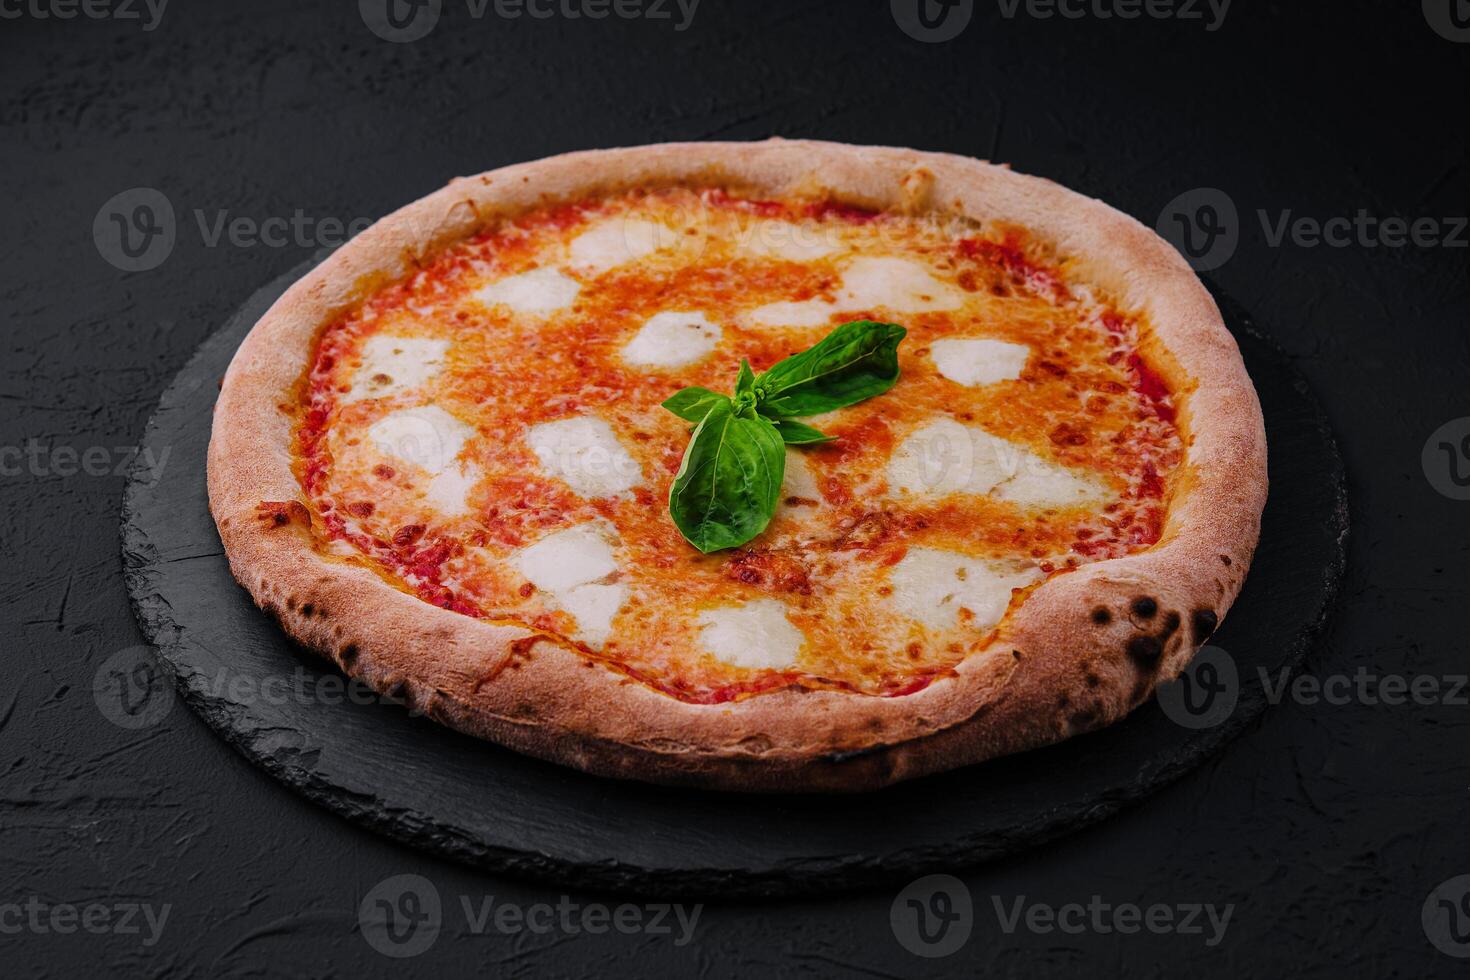 Neapolitan pizza on a cream sauce photo